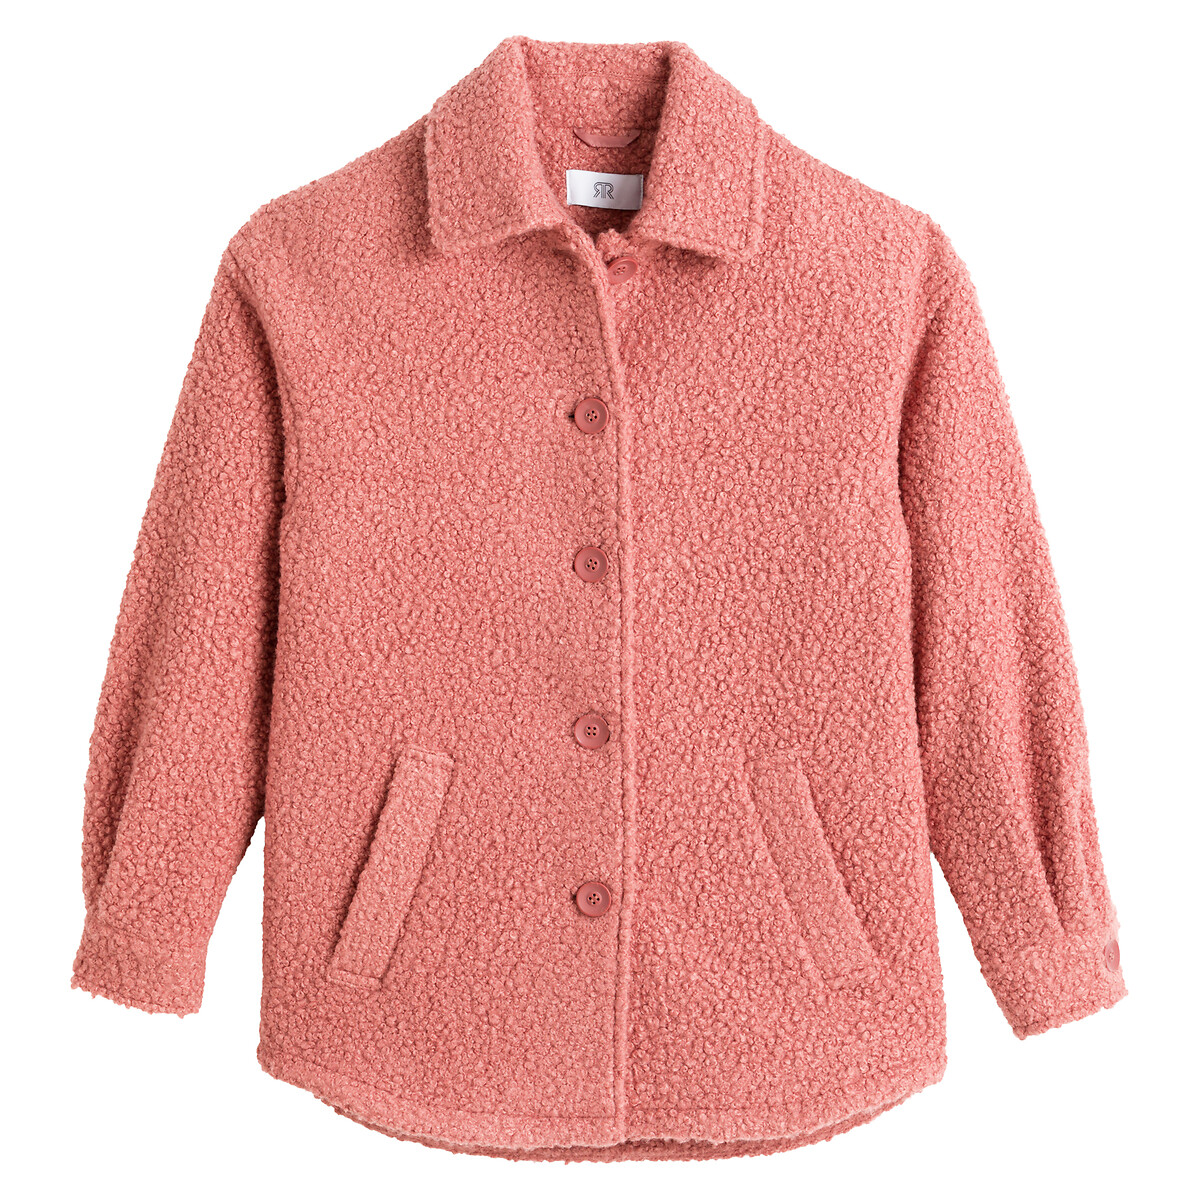 Куртка LaRedoute Легкая под мутон 34 (FR) - 40 (RUS) розовый, размер 34 (FR) - 40 (RUS) Легкая под мутон 34 (FR) - 40 (RUS) розовый - фото 5